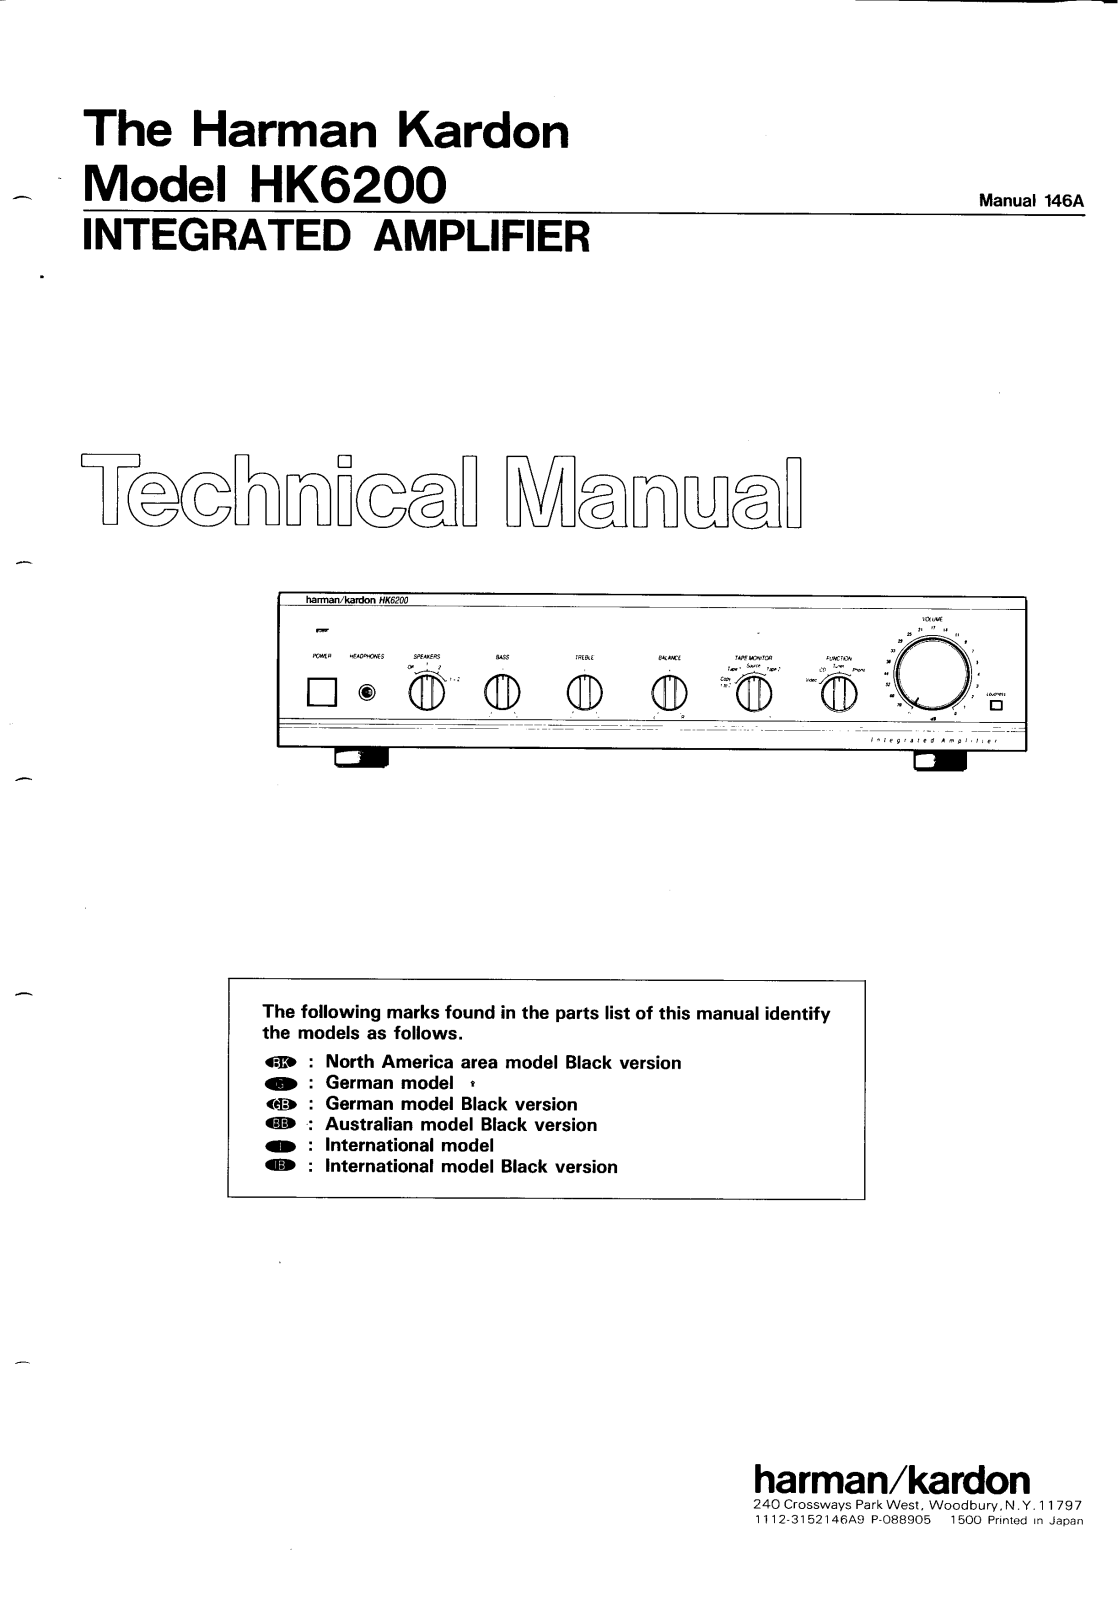 Harman Kardon HK6200 Technical Manual